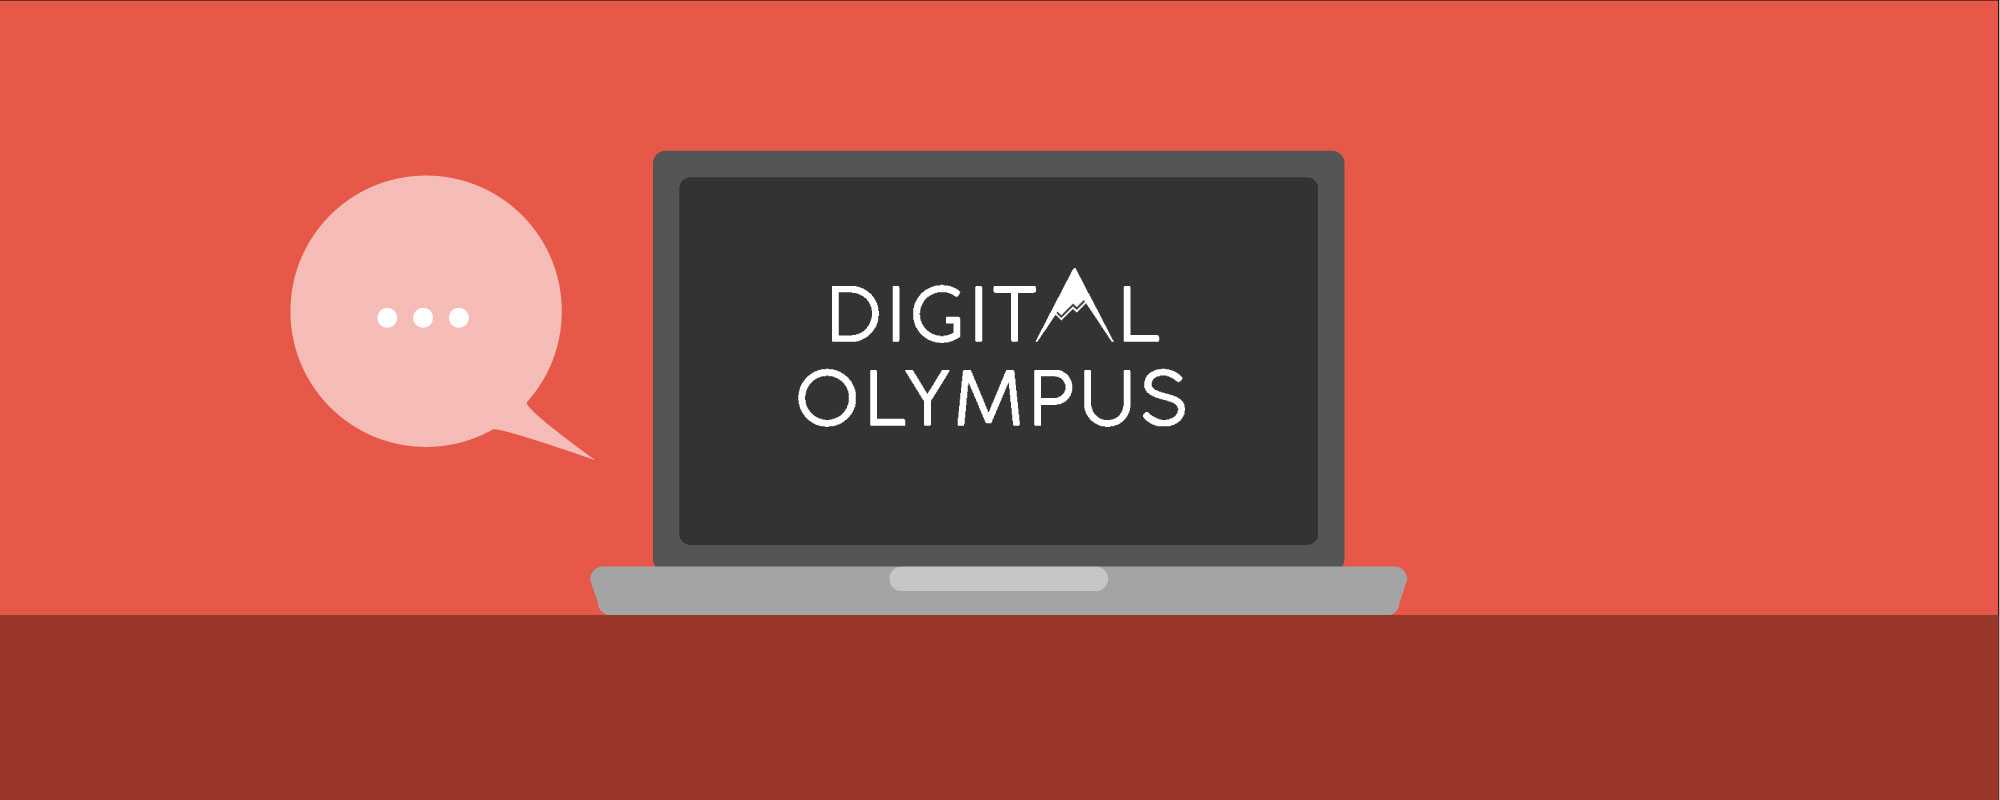 Digital Olympus Post